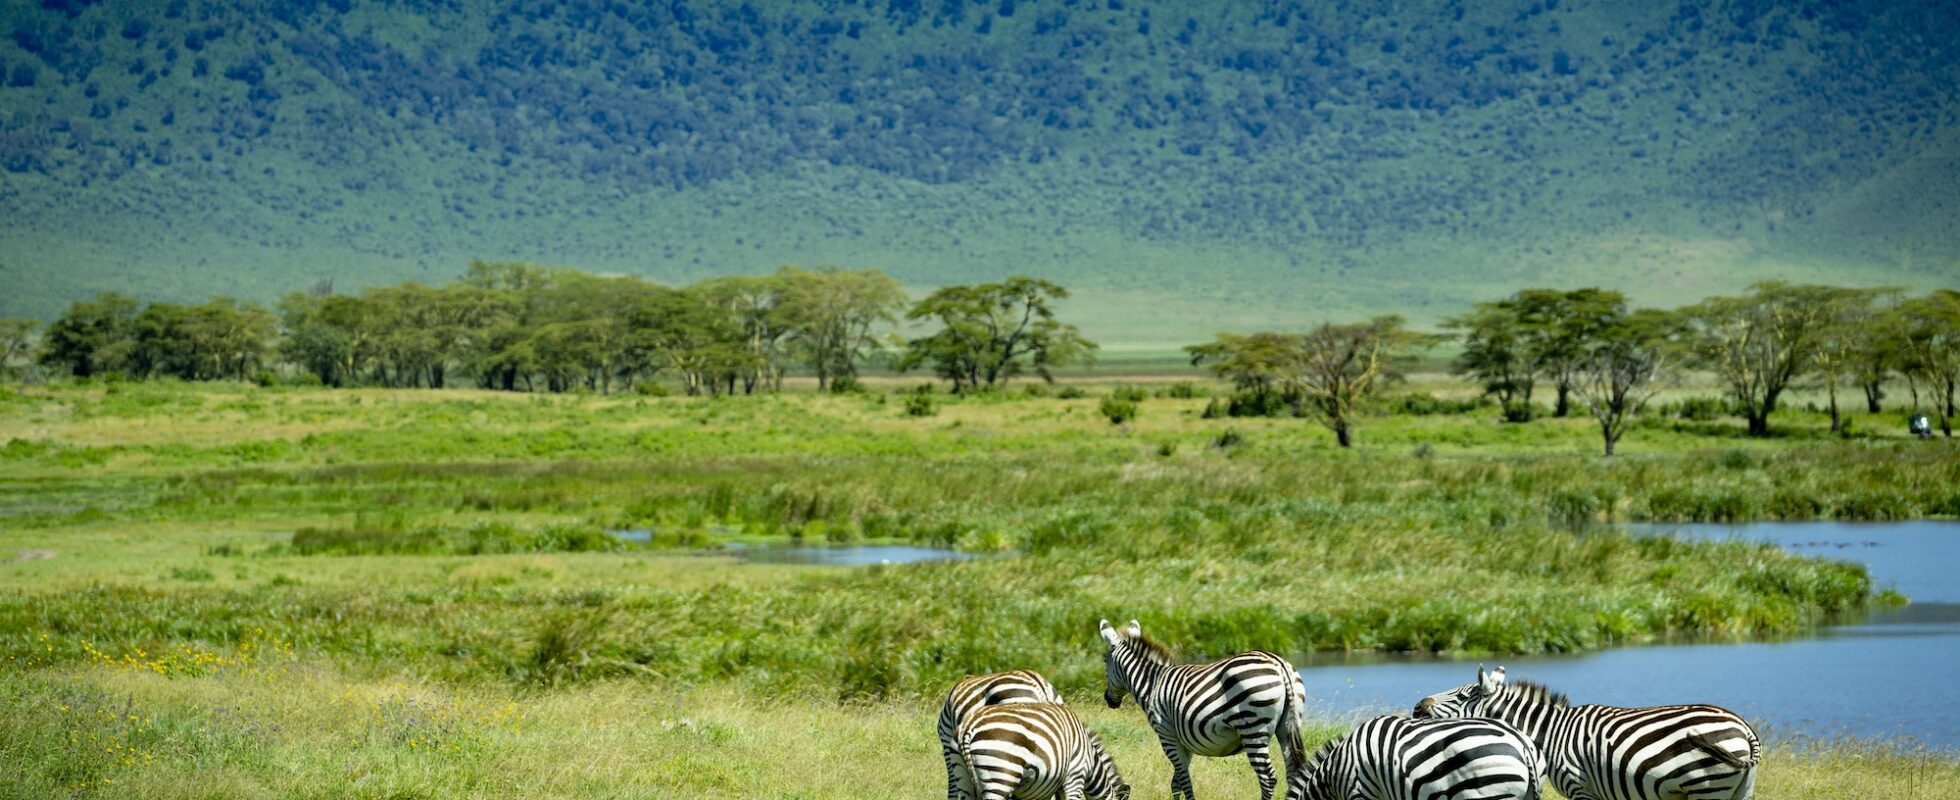 Zebras Ngorongoro crater